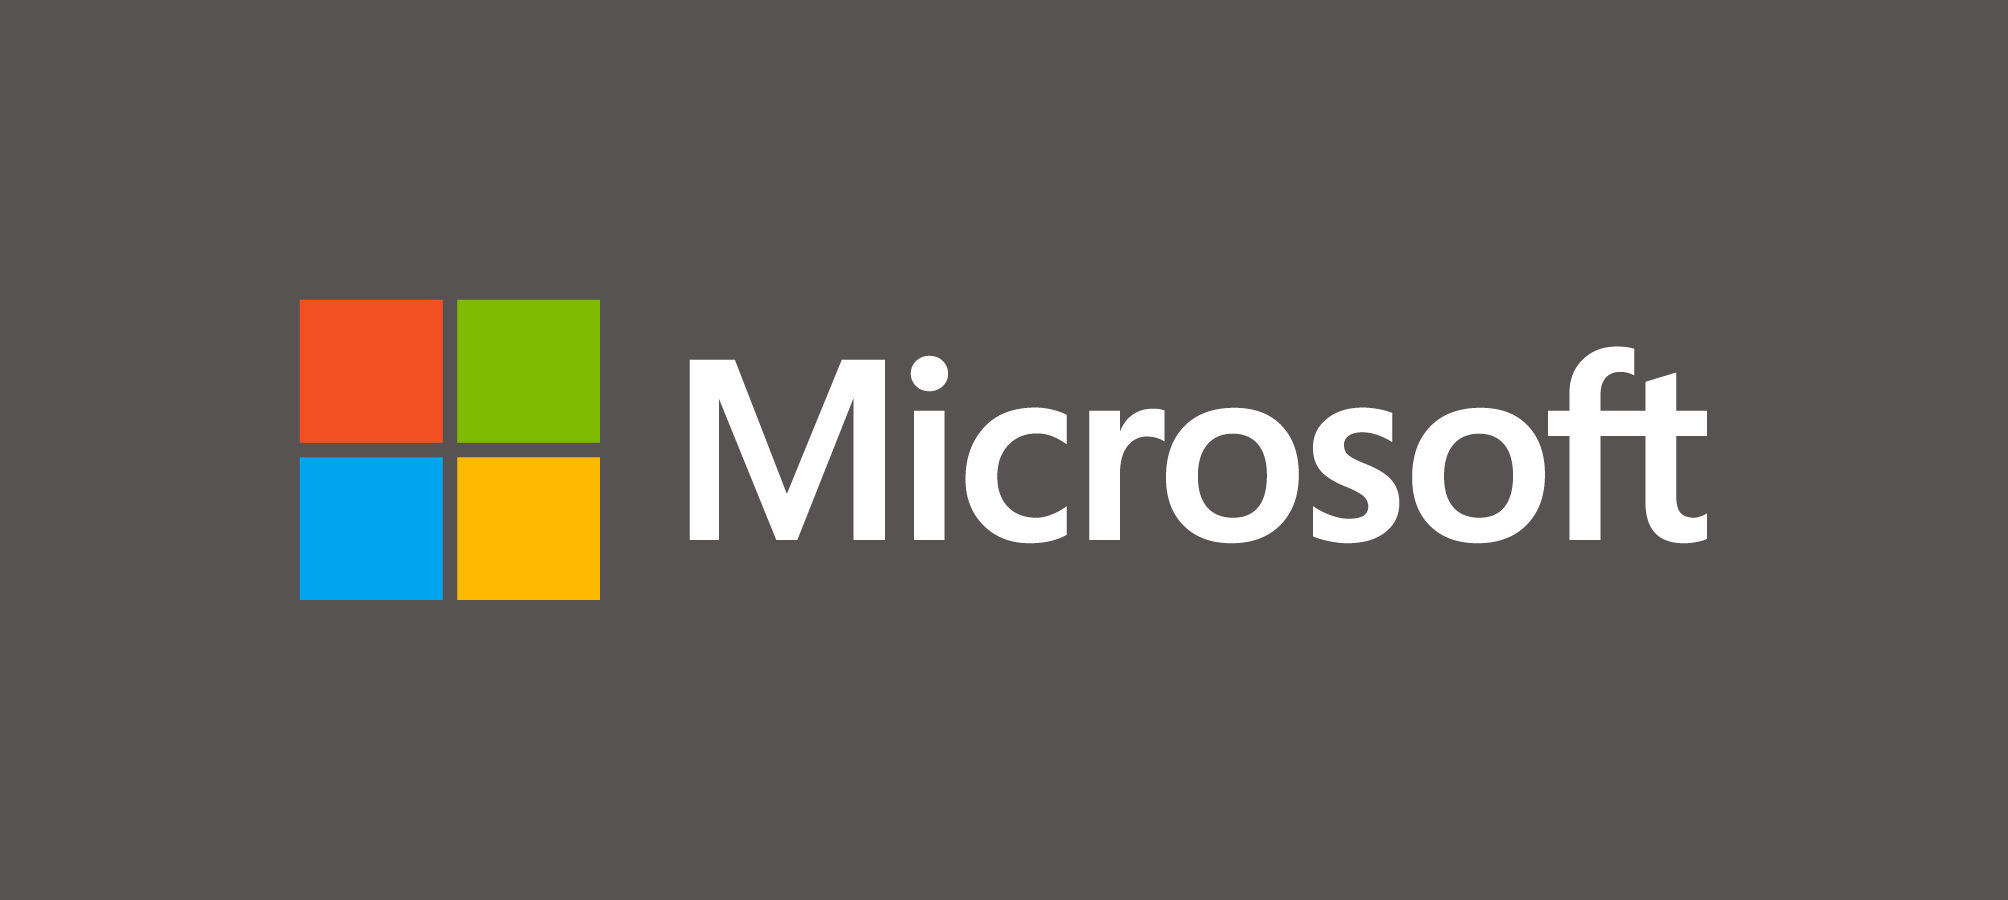 Microsoft Corporate Logo Guidelines | Trademarks